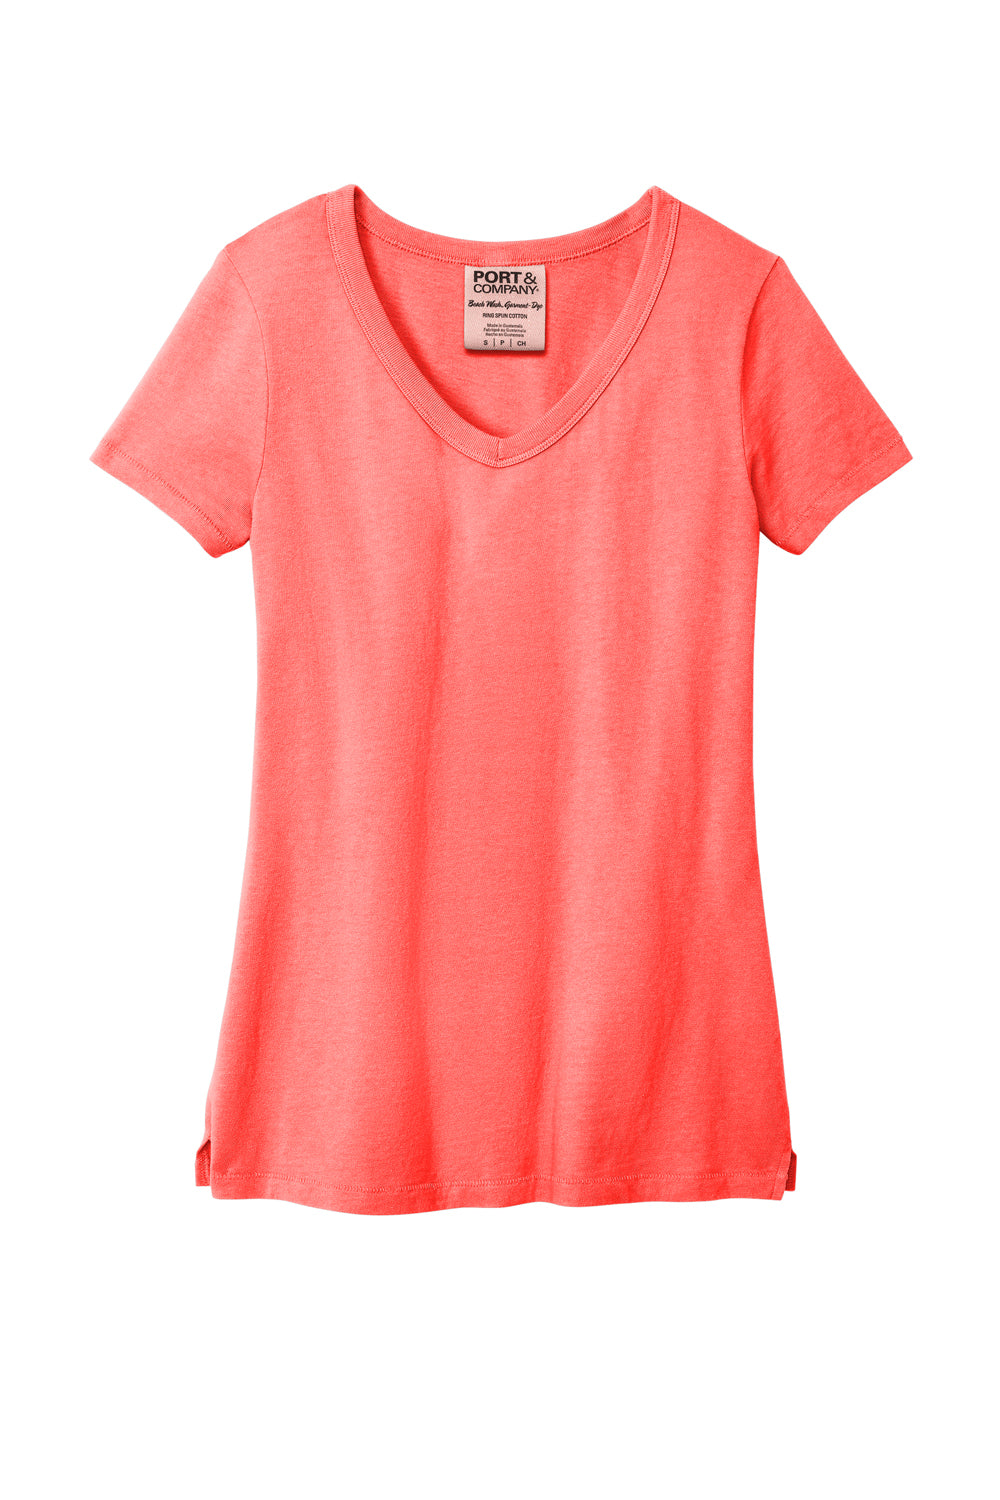 Port & Company LPC099V Womens Beach Wash Garment Dyed Short Sleeve V-Neck T-Shirt Poppy Red Flat Front